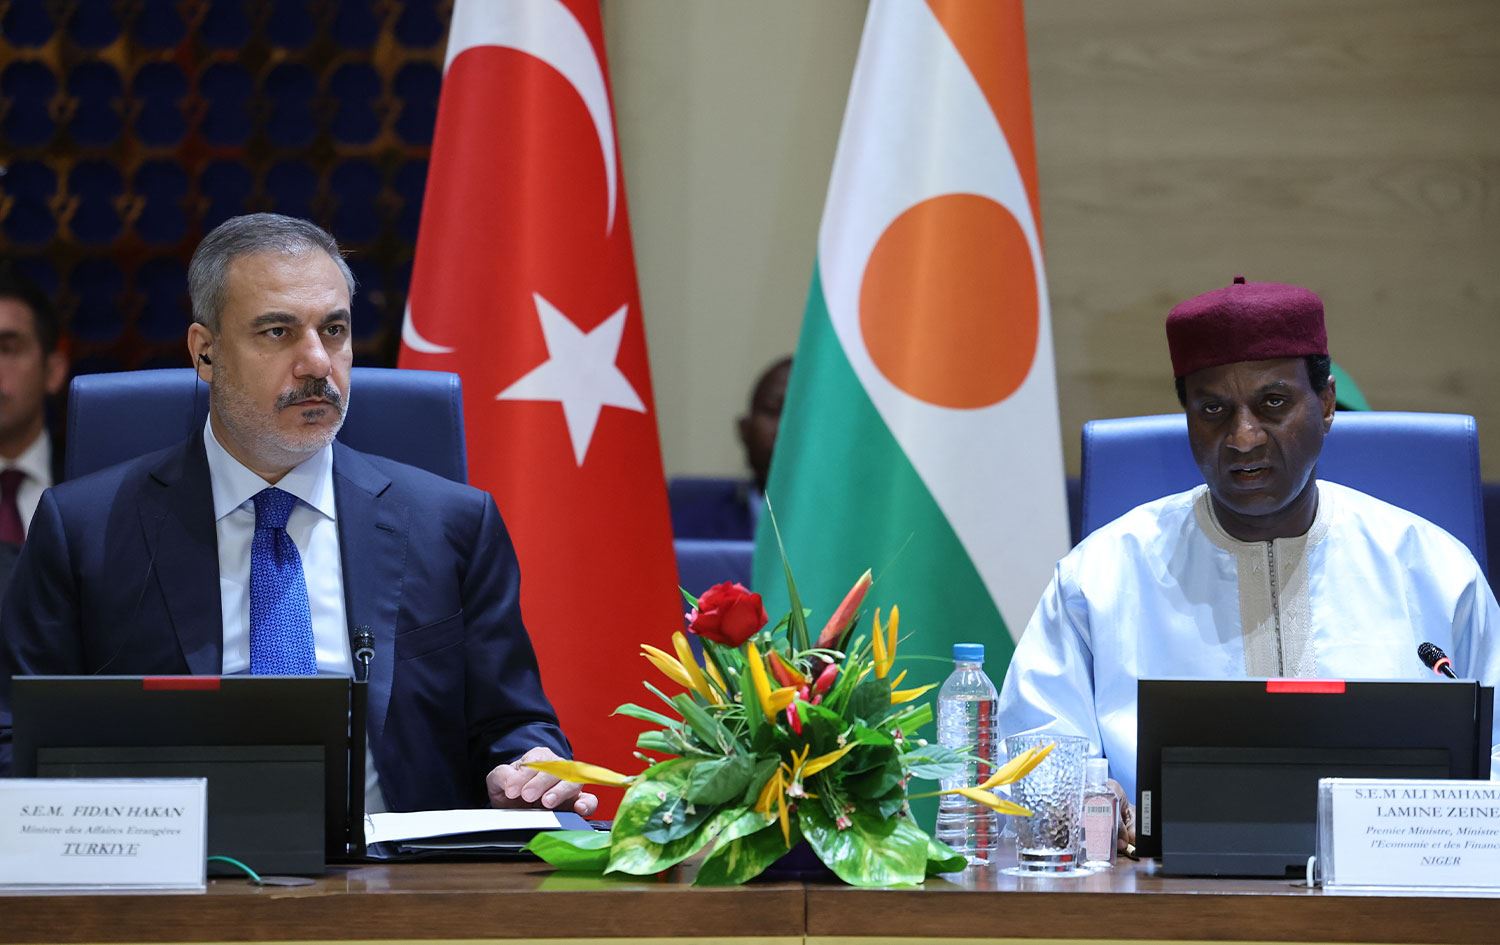 Niger, Turkey deepen ties in energy, defense